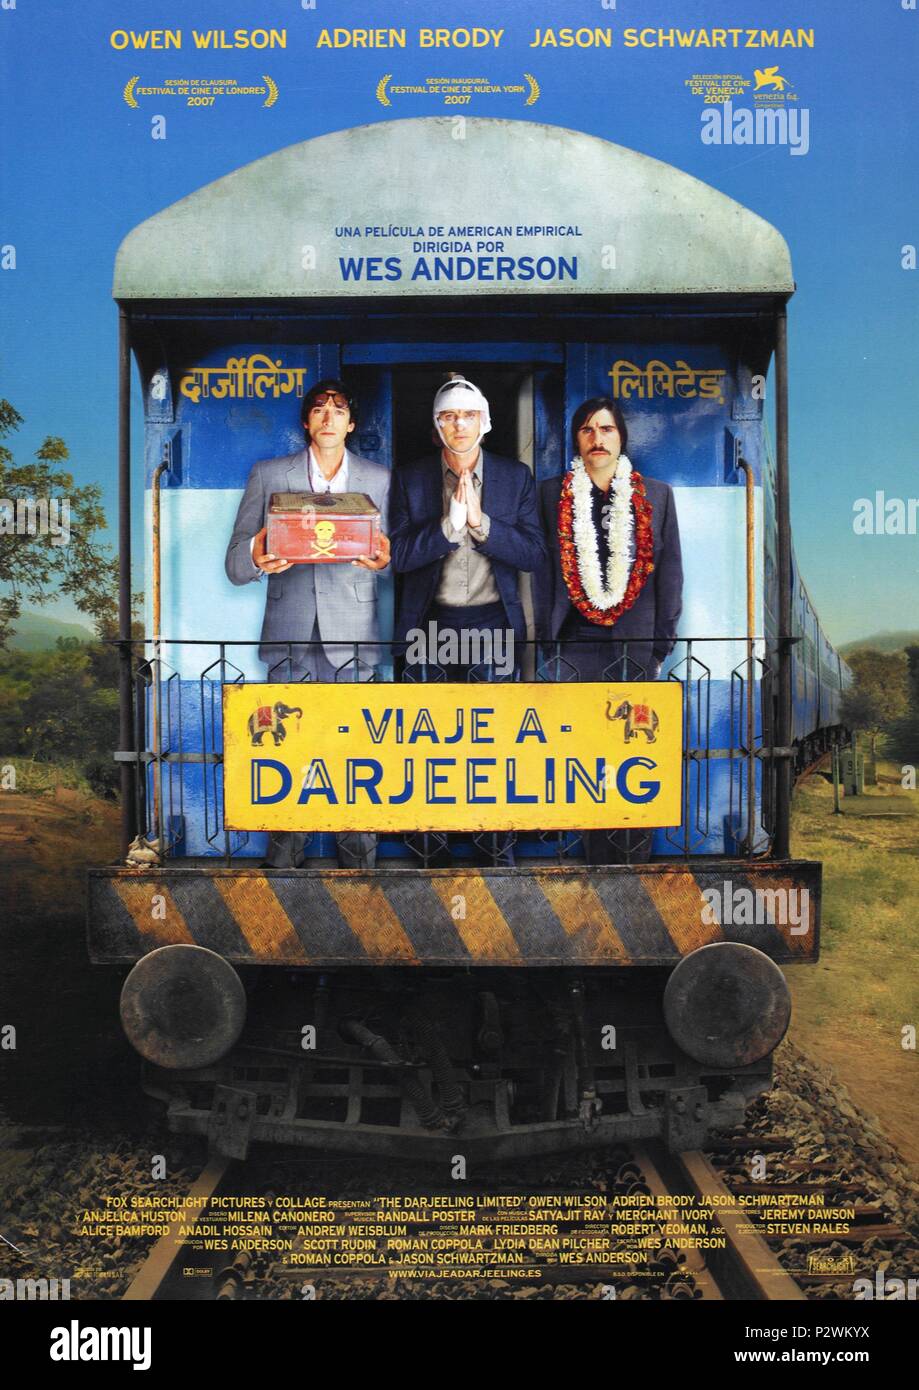 The Darjeeling Limited - 2007 - Original Movie Poster - AotM – Art